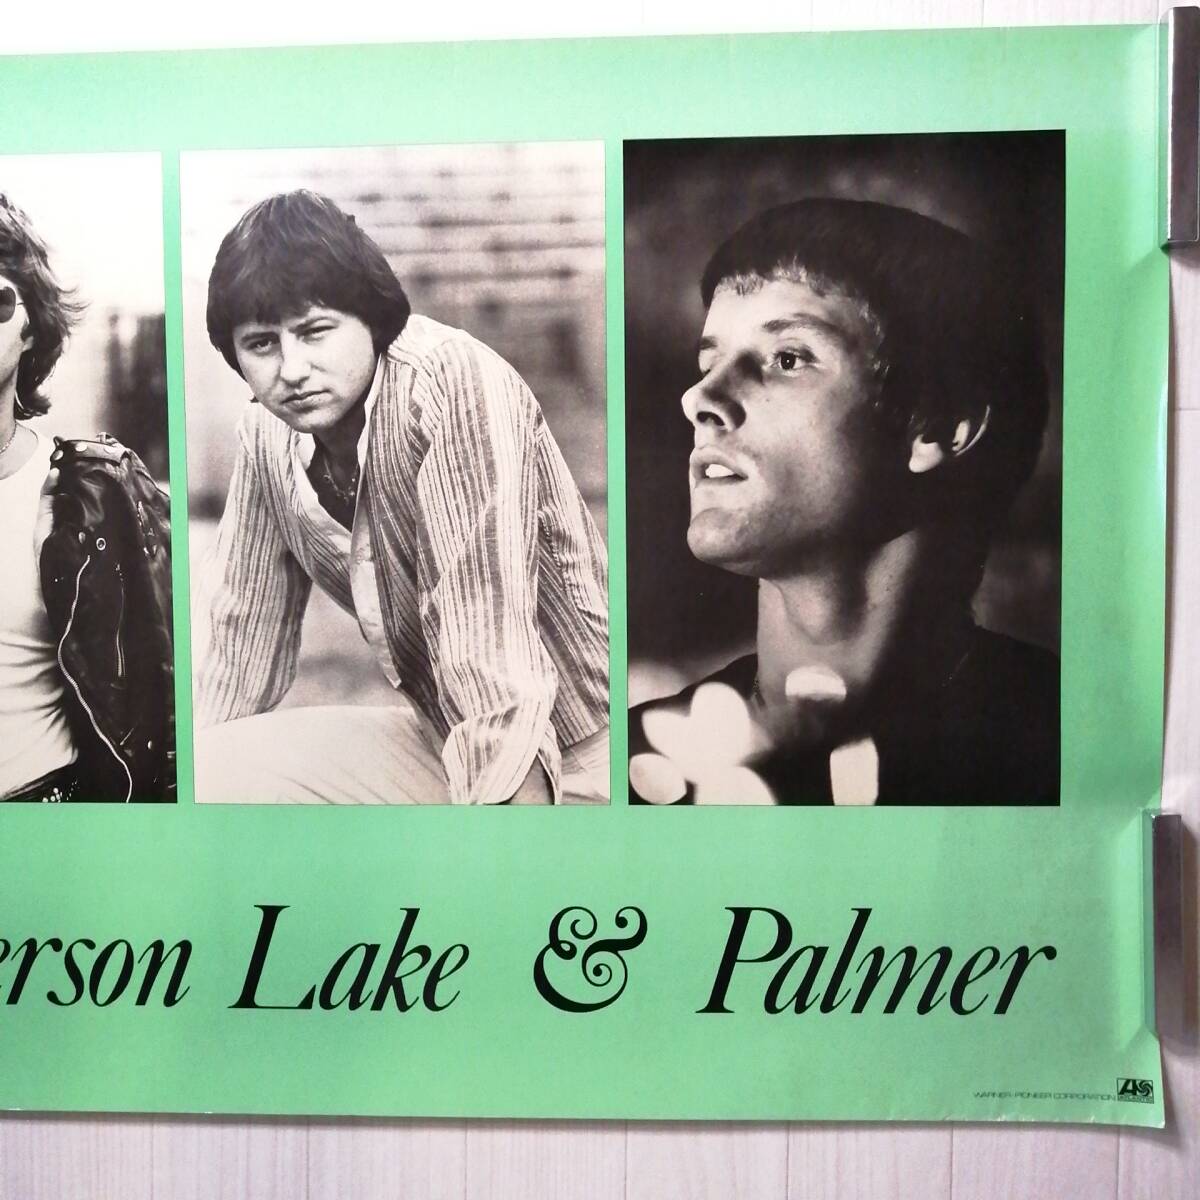 Emerson Lake & Palmer 大判 ポスター グッズ elp エマーソン・レイク・アンド・パーマー_画像3